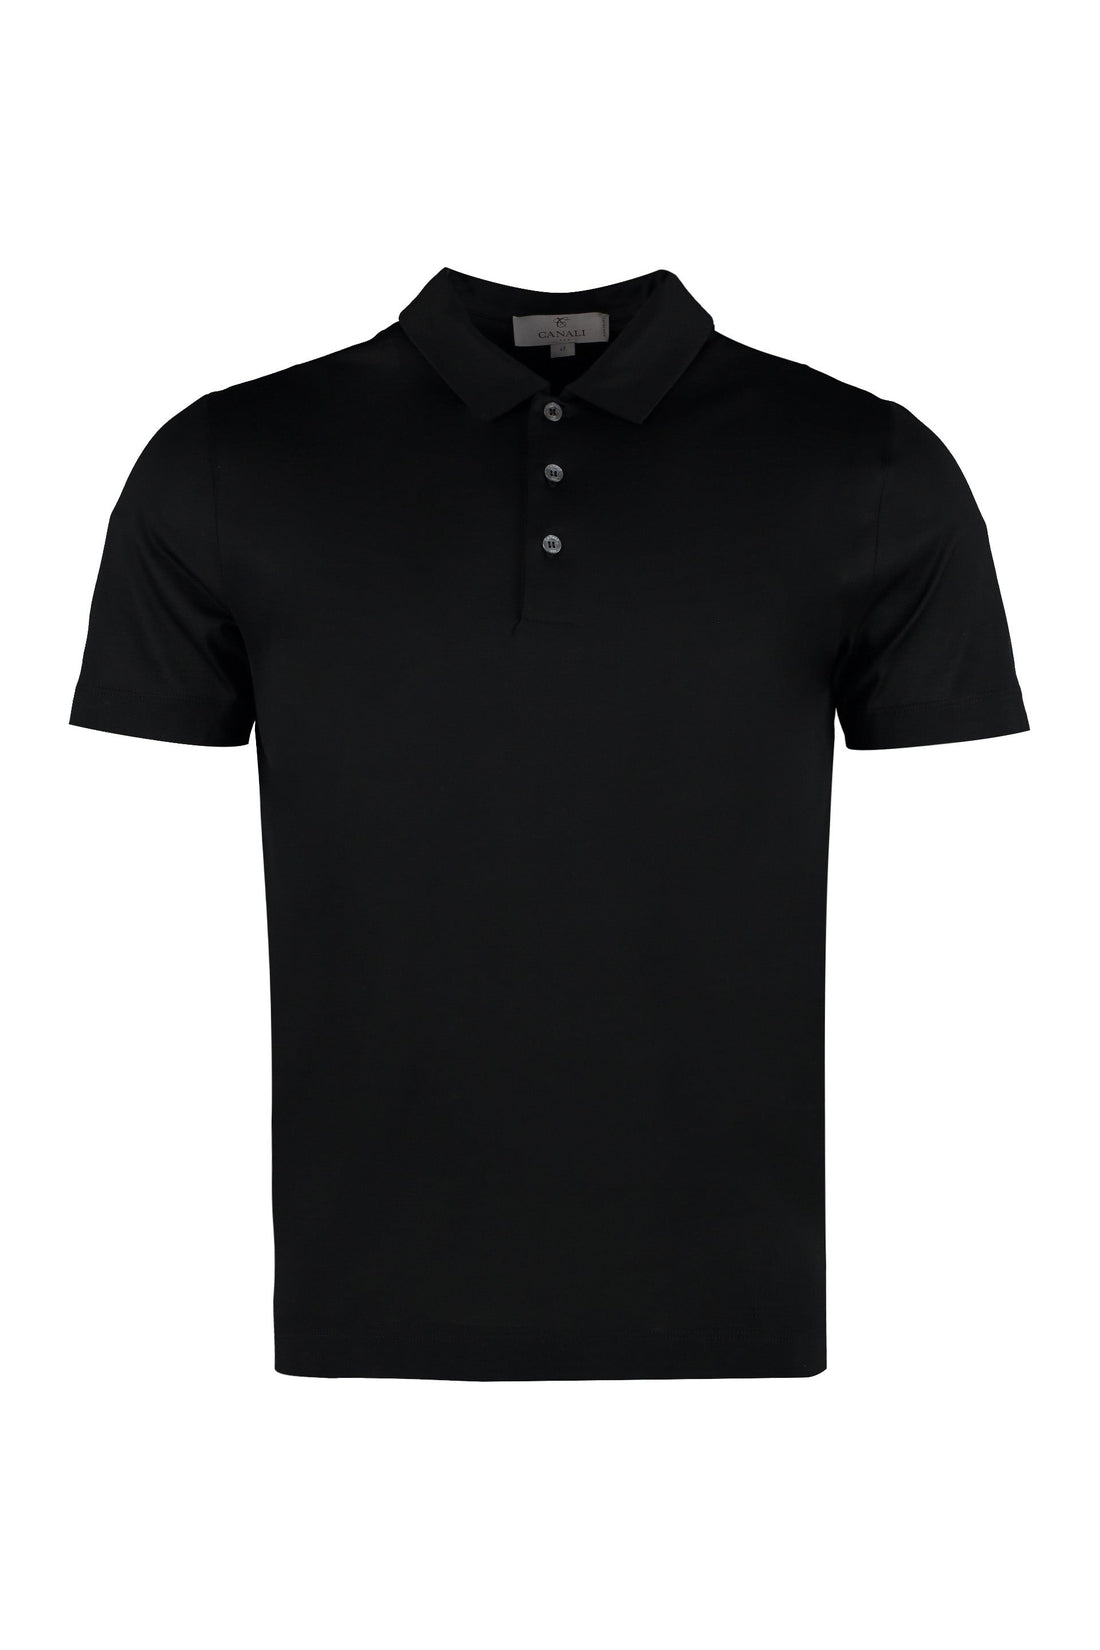 Canali-OUTLET-SALE-Short sleeve cotton polo shirt-ARCHIVIST